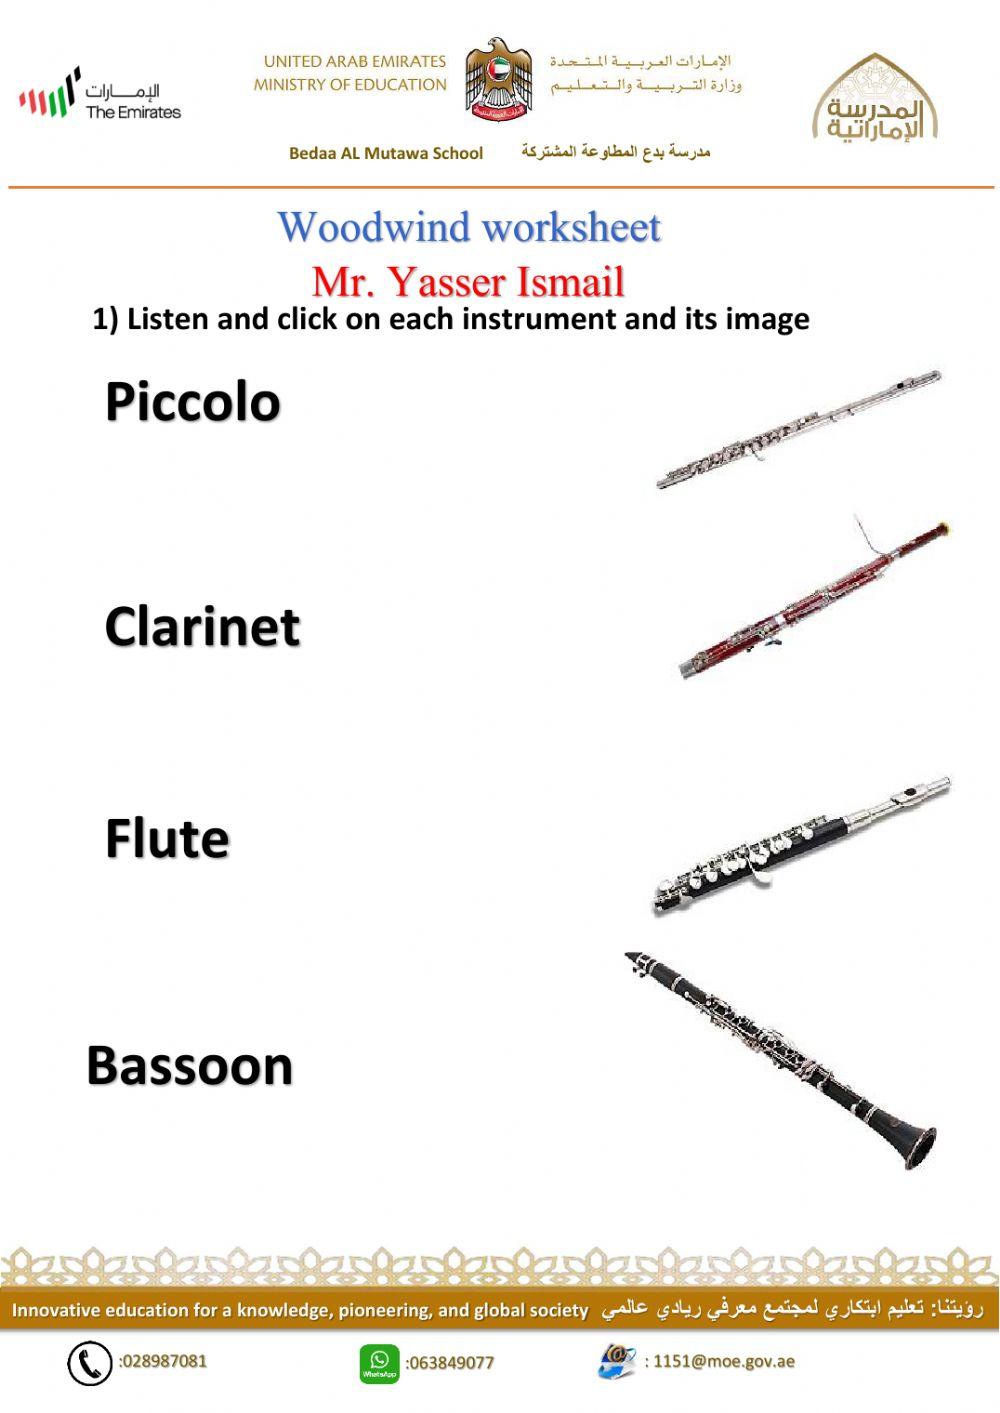 Woodwind instrument worksheet Listen